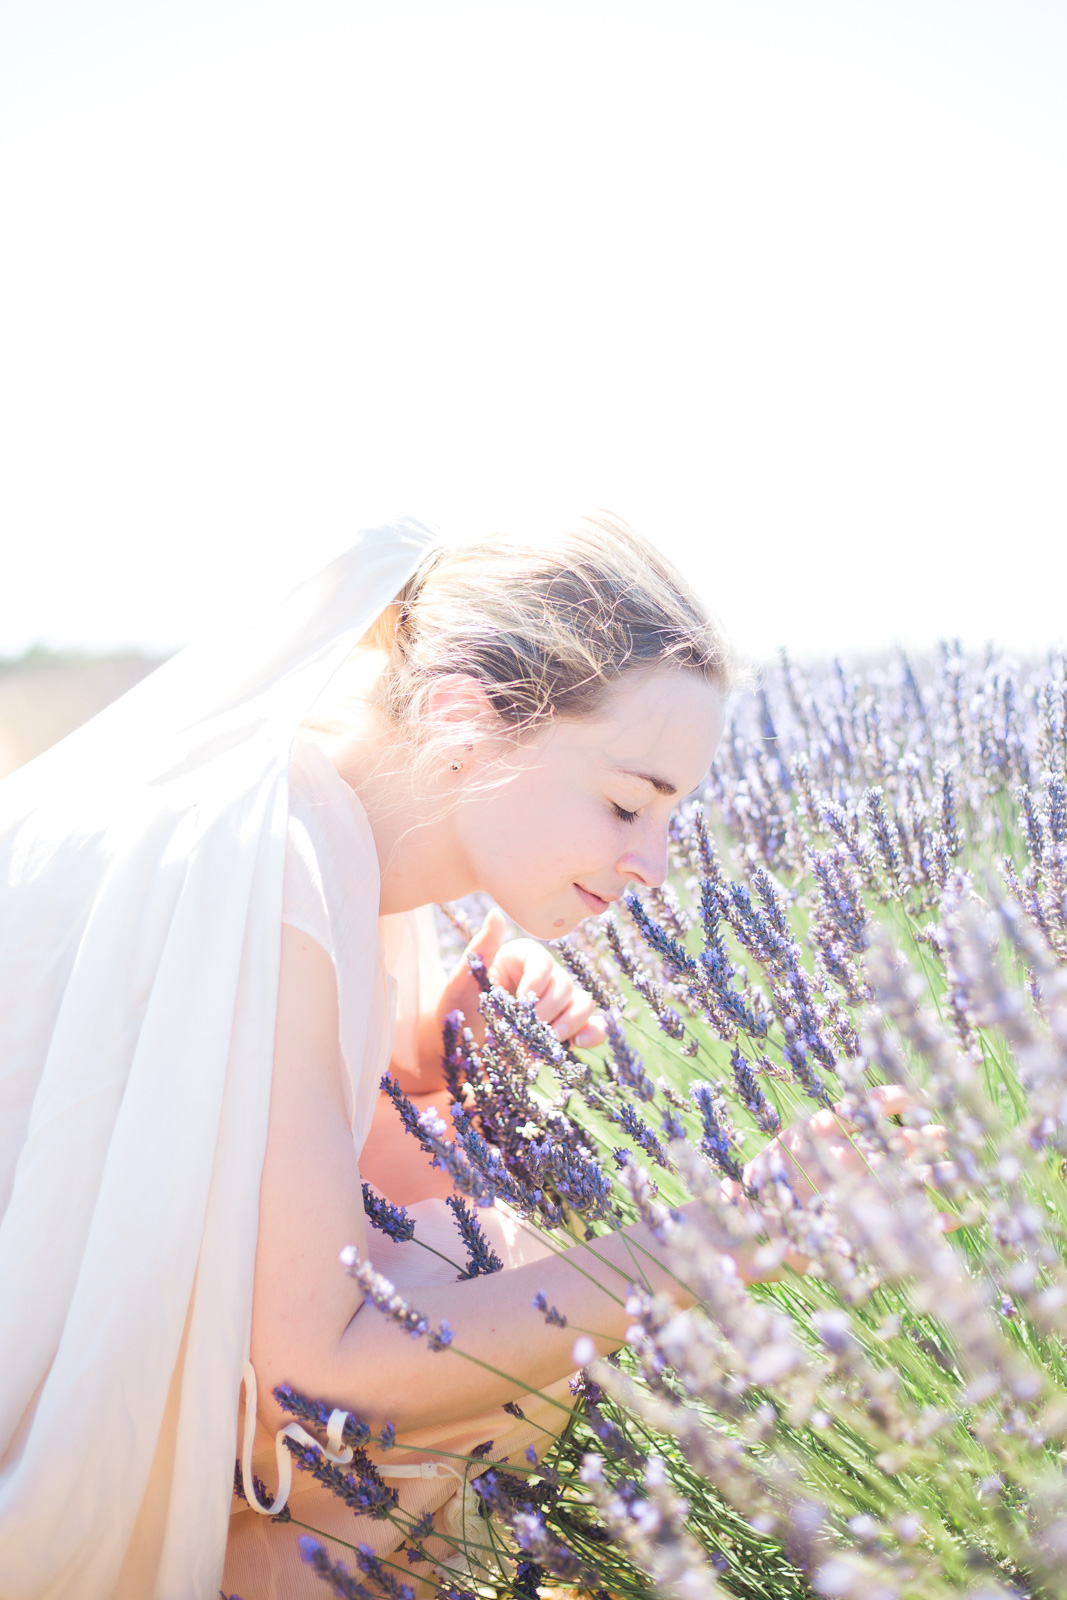 Wedding Photographer, Lavender Fields, Southern France, Matt Erickson Photography, Destination Wedding Photographer, France, Provence